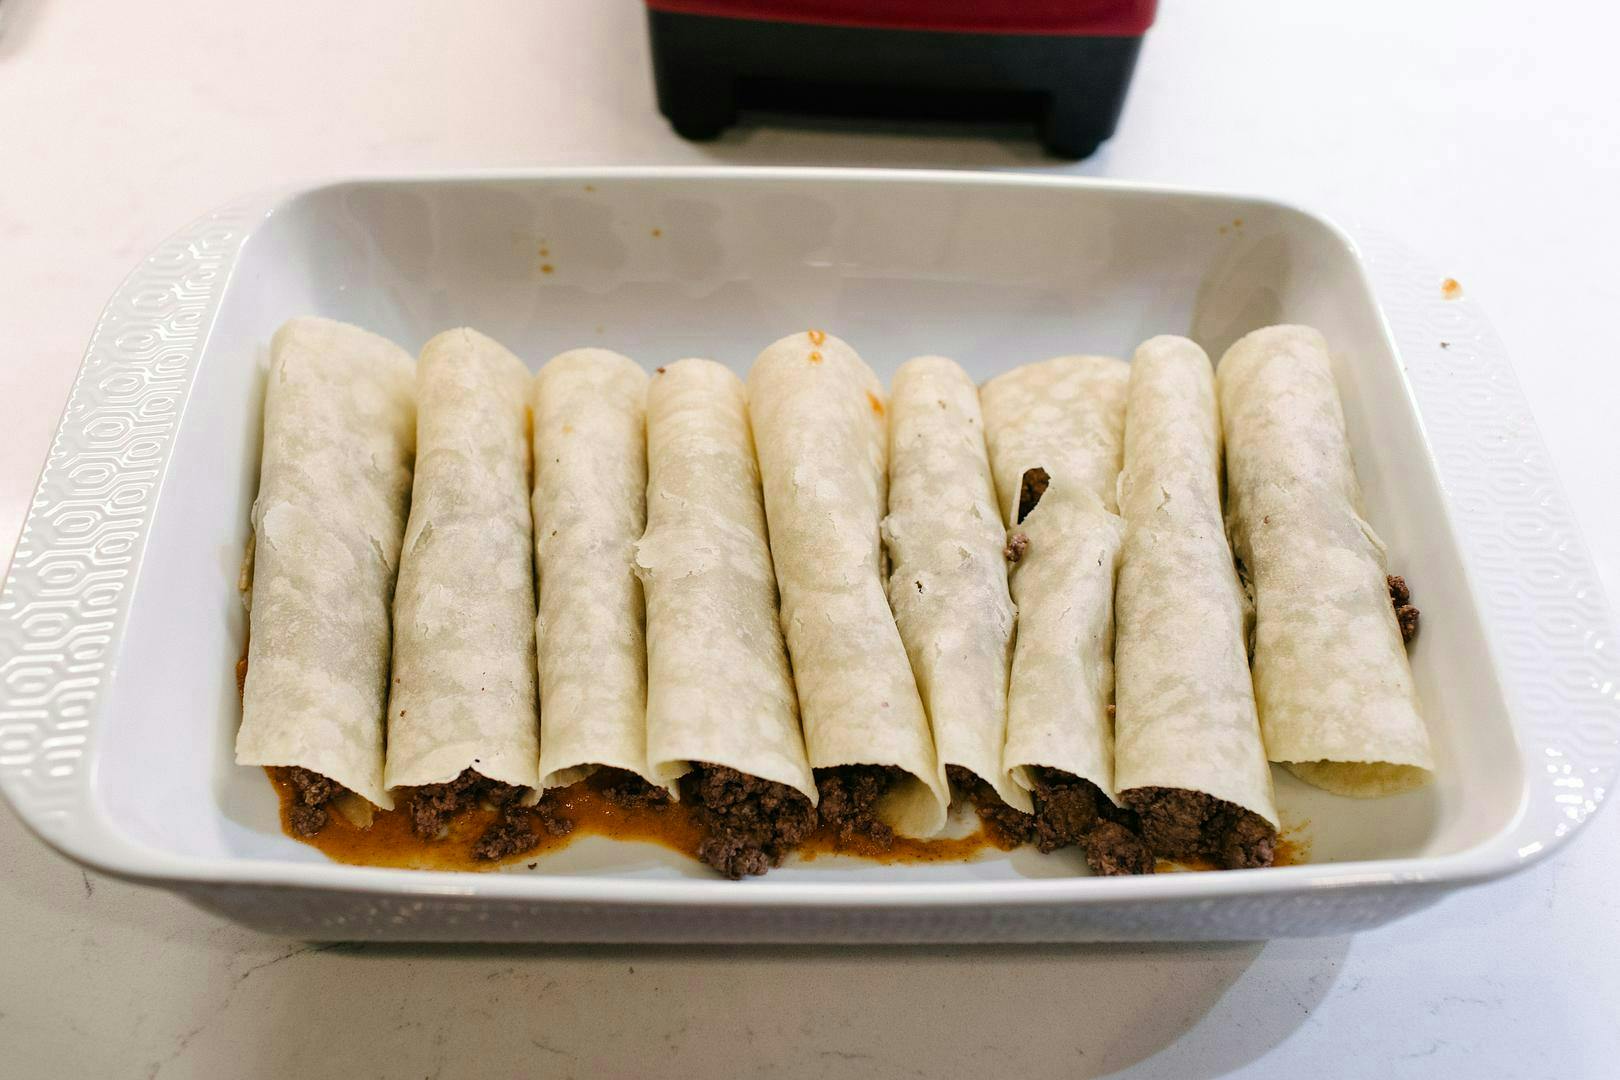 rolled-up enchiladas in baking dish